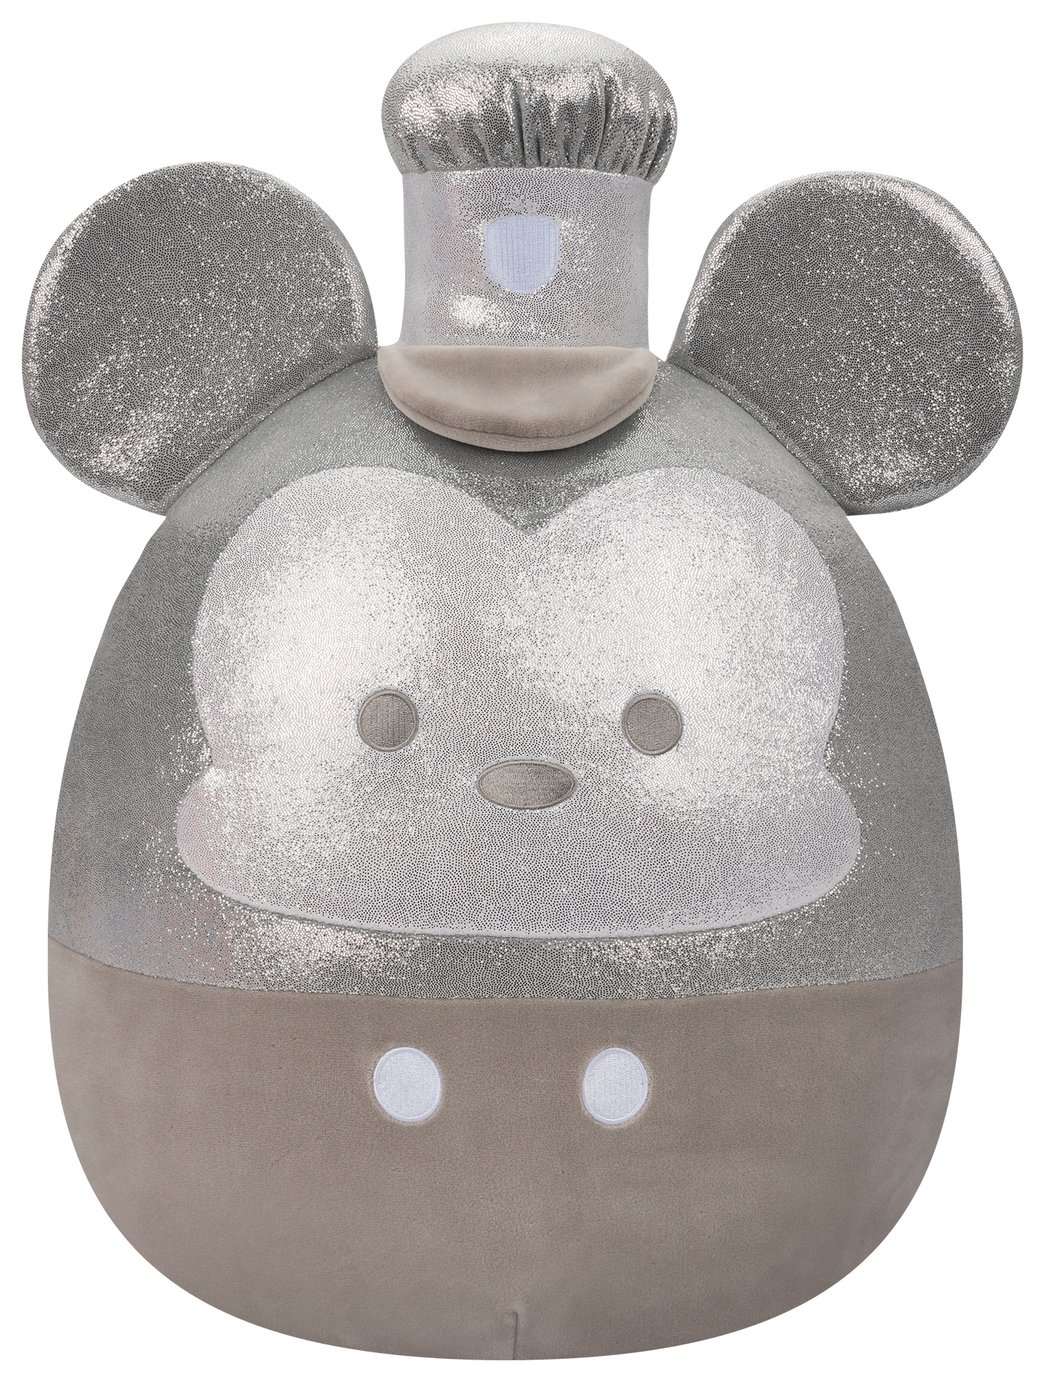 Original Squishmallows 14-Inch Steamboat Mickey Mouse Plush